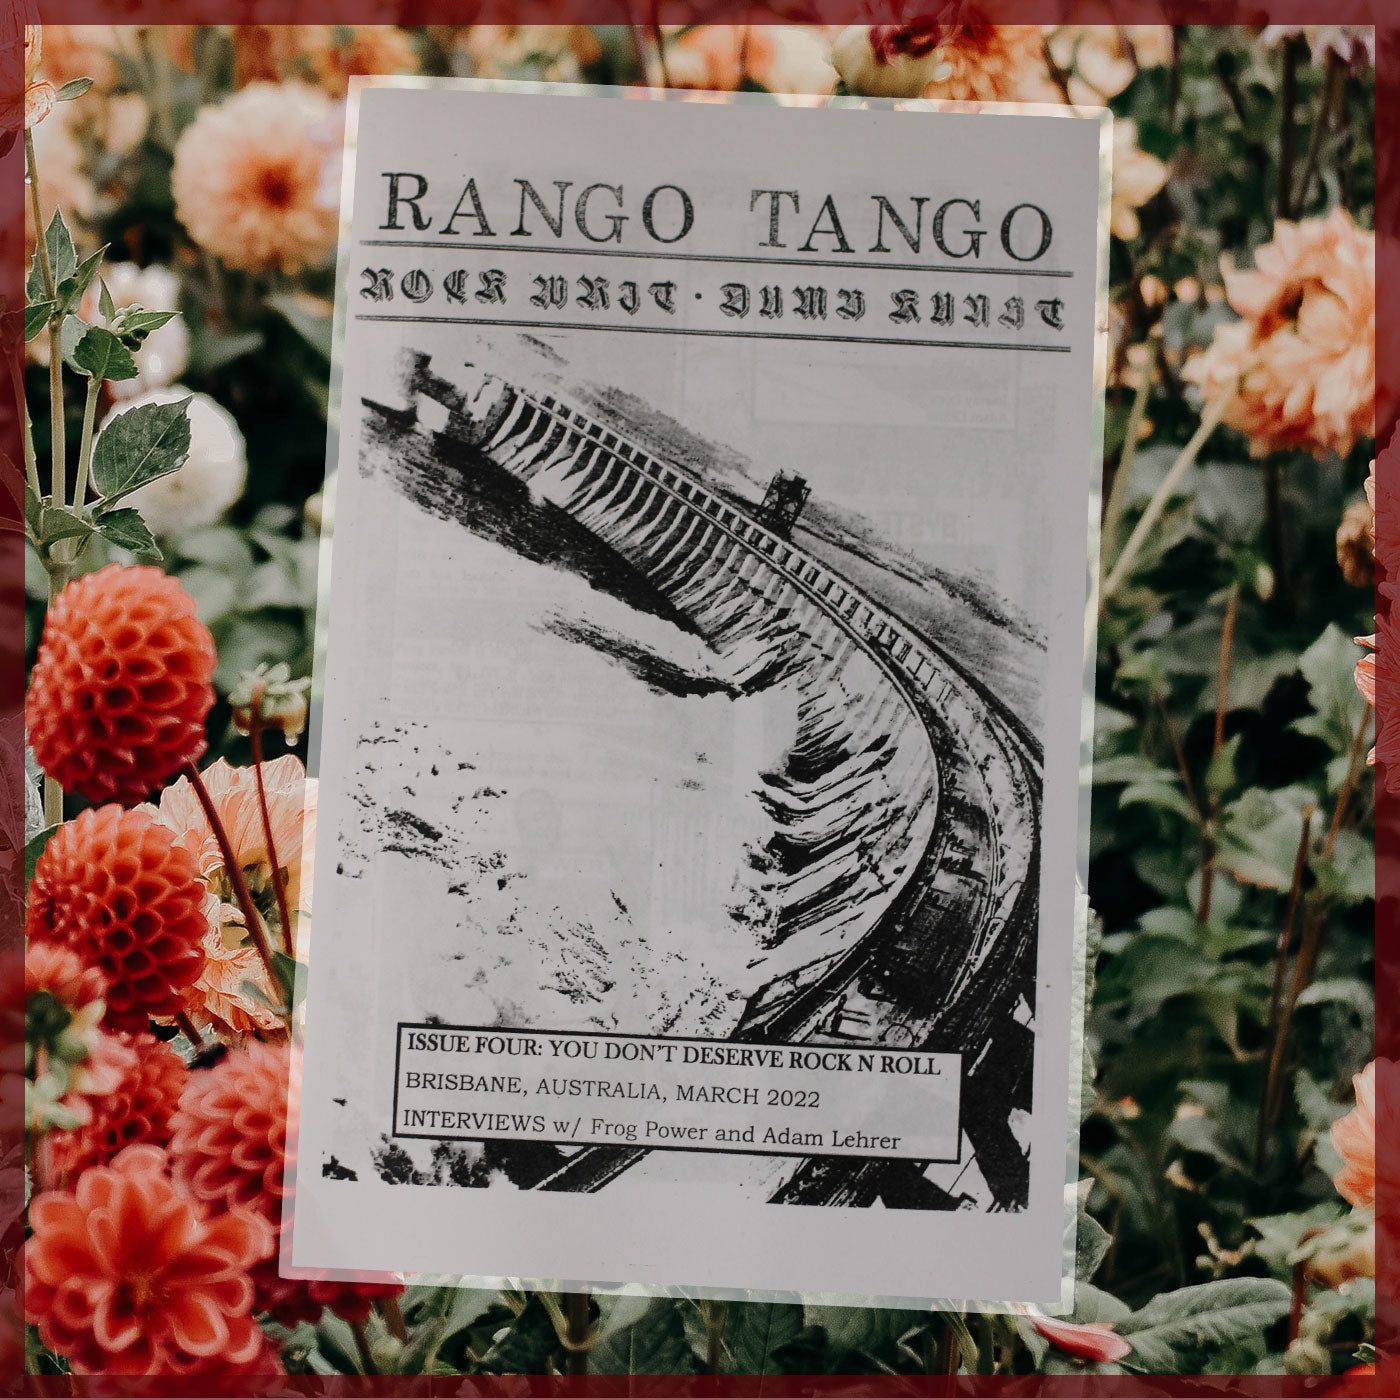 Rango Tango Issue Four: You Don't Deserve Rock N Roll [Zine]